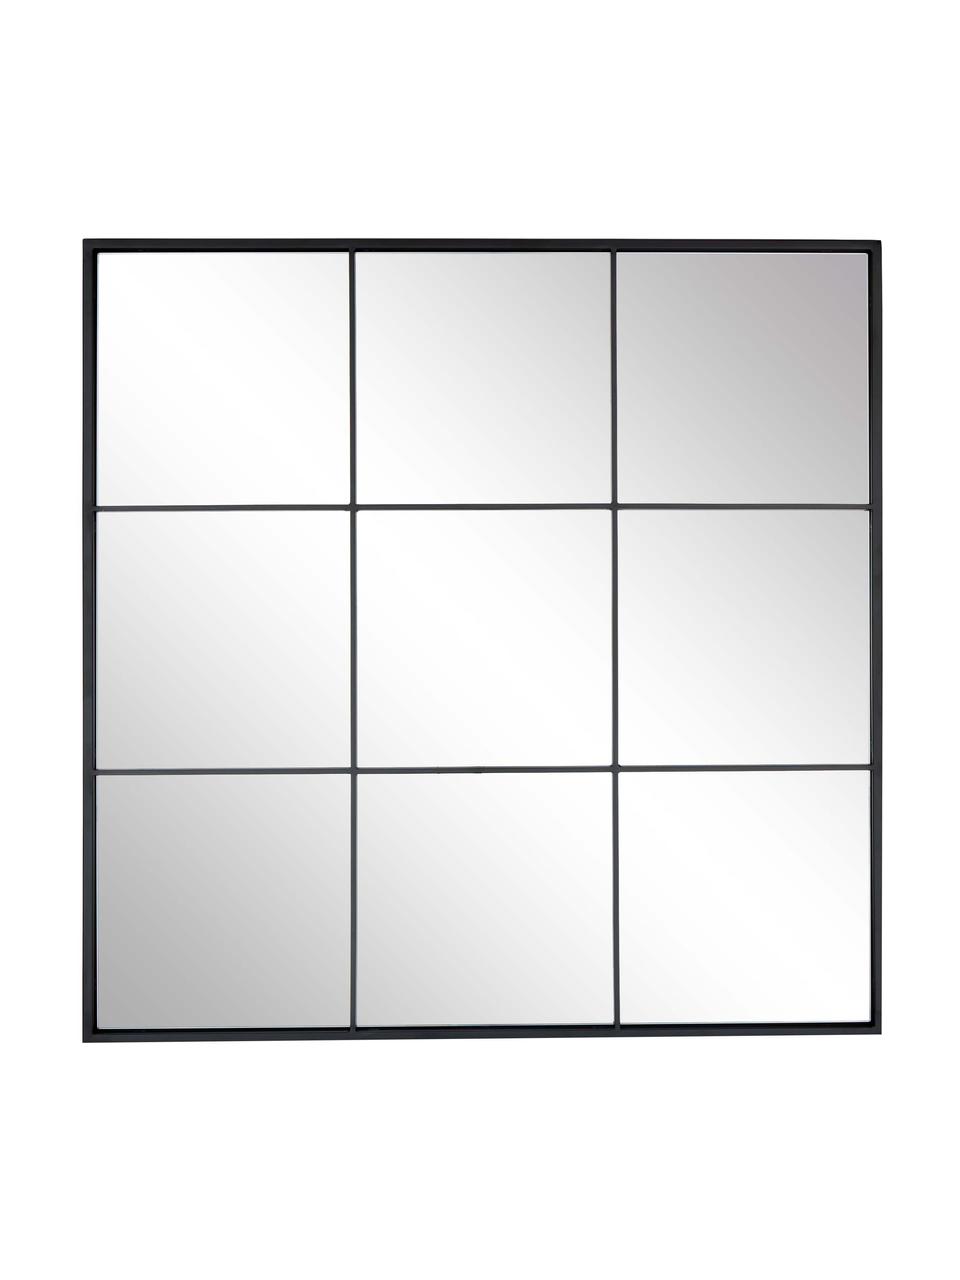 Nástěnné zrcadlo Clarita, Černá, Š 70 cm, V 70 cm